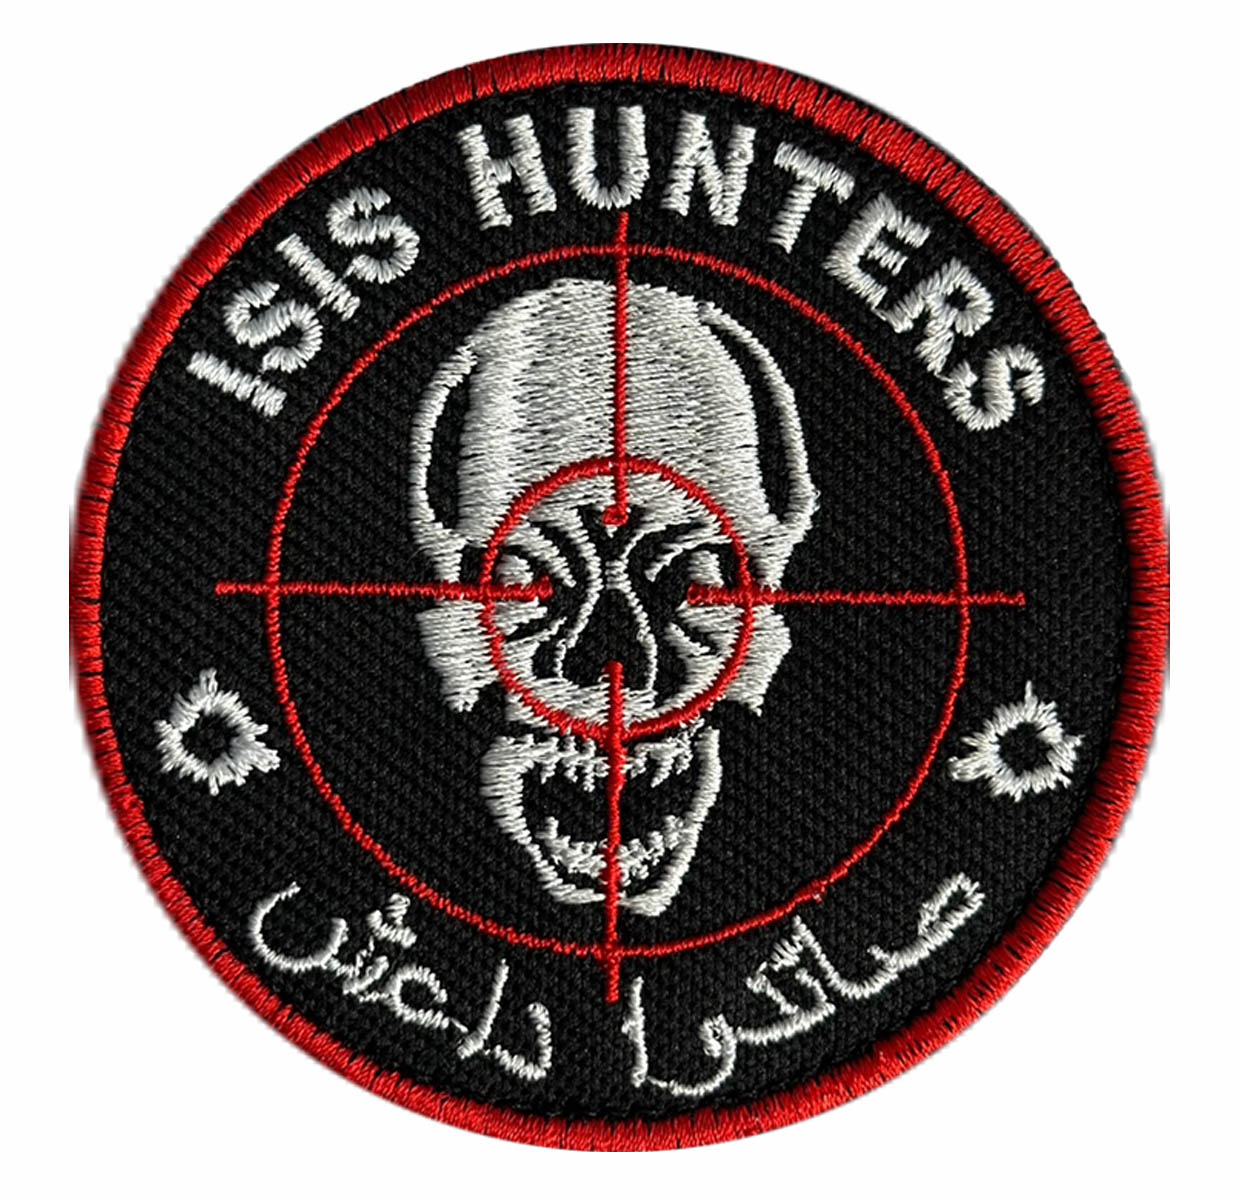 Купить шеврон "ISIS Hunters"